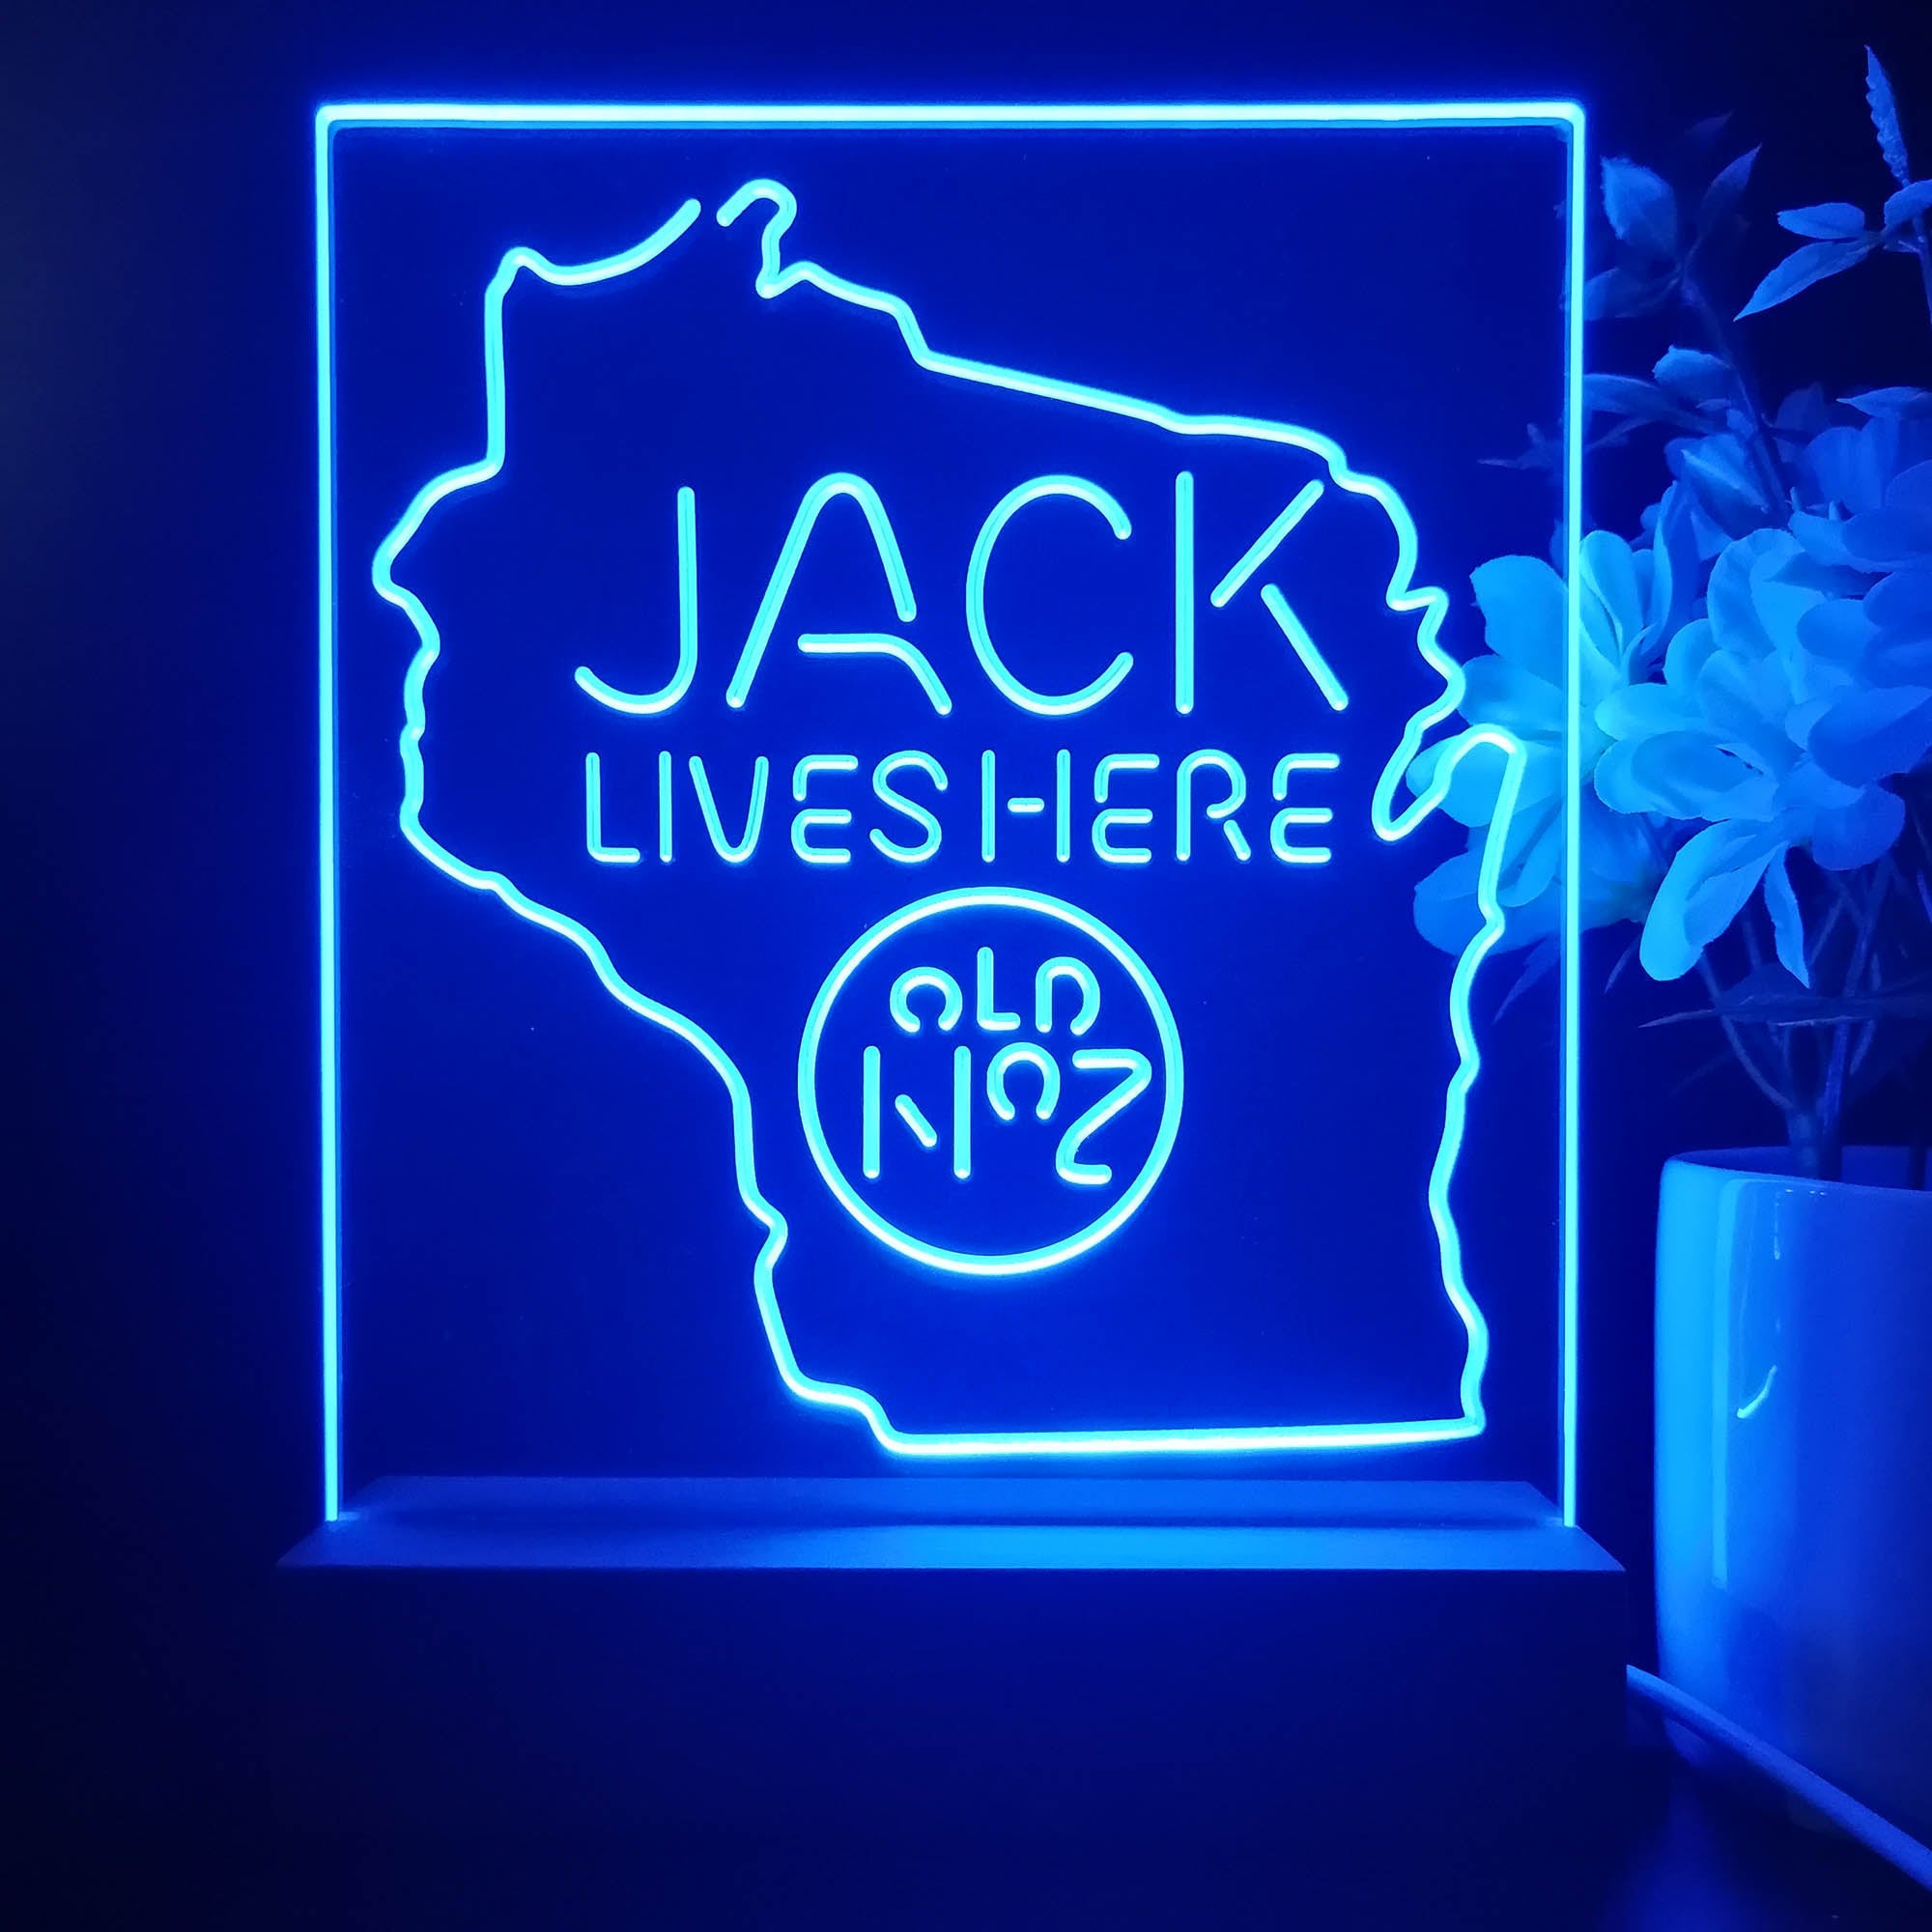 Wisconisin Jack Lives Here Night Light Neon Pub Bar Lamp